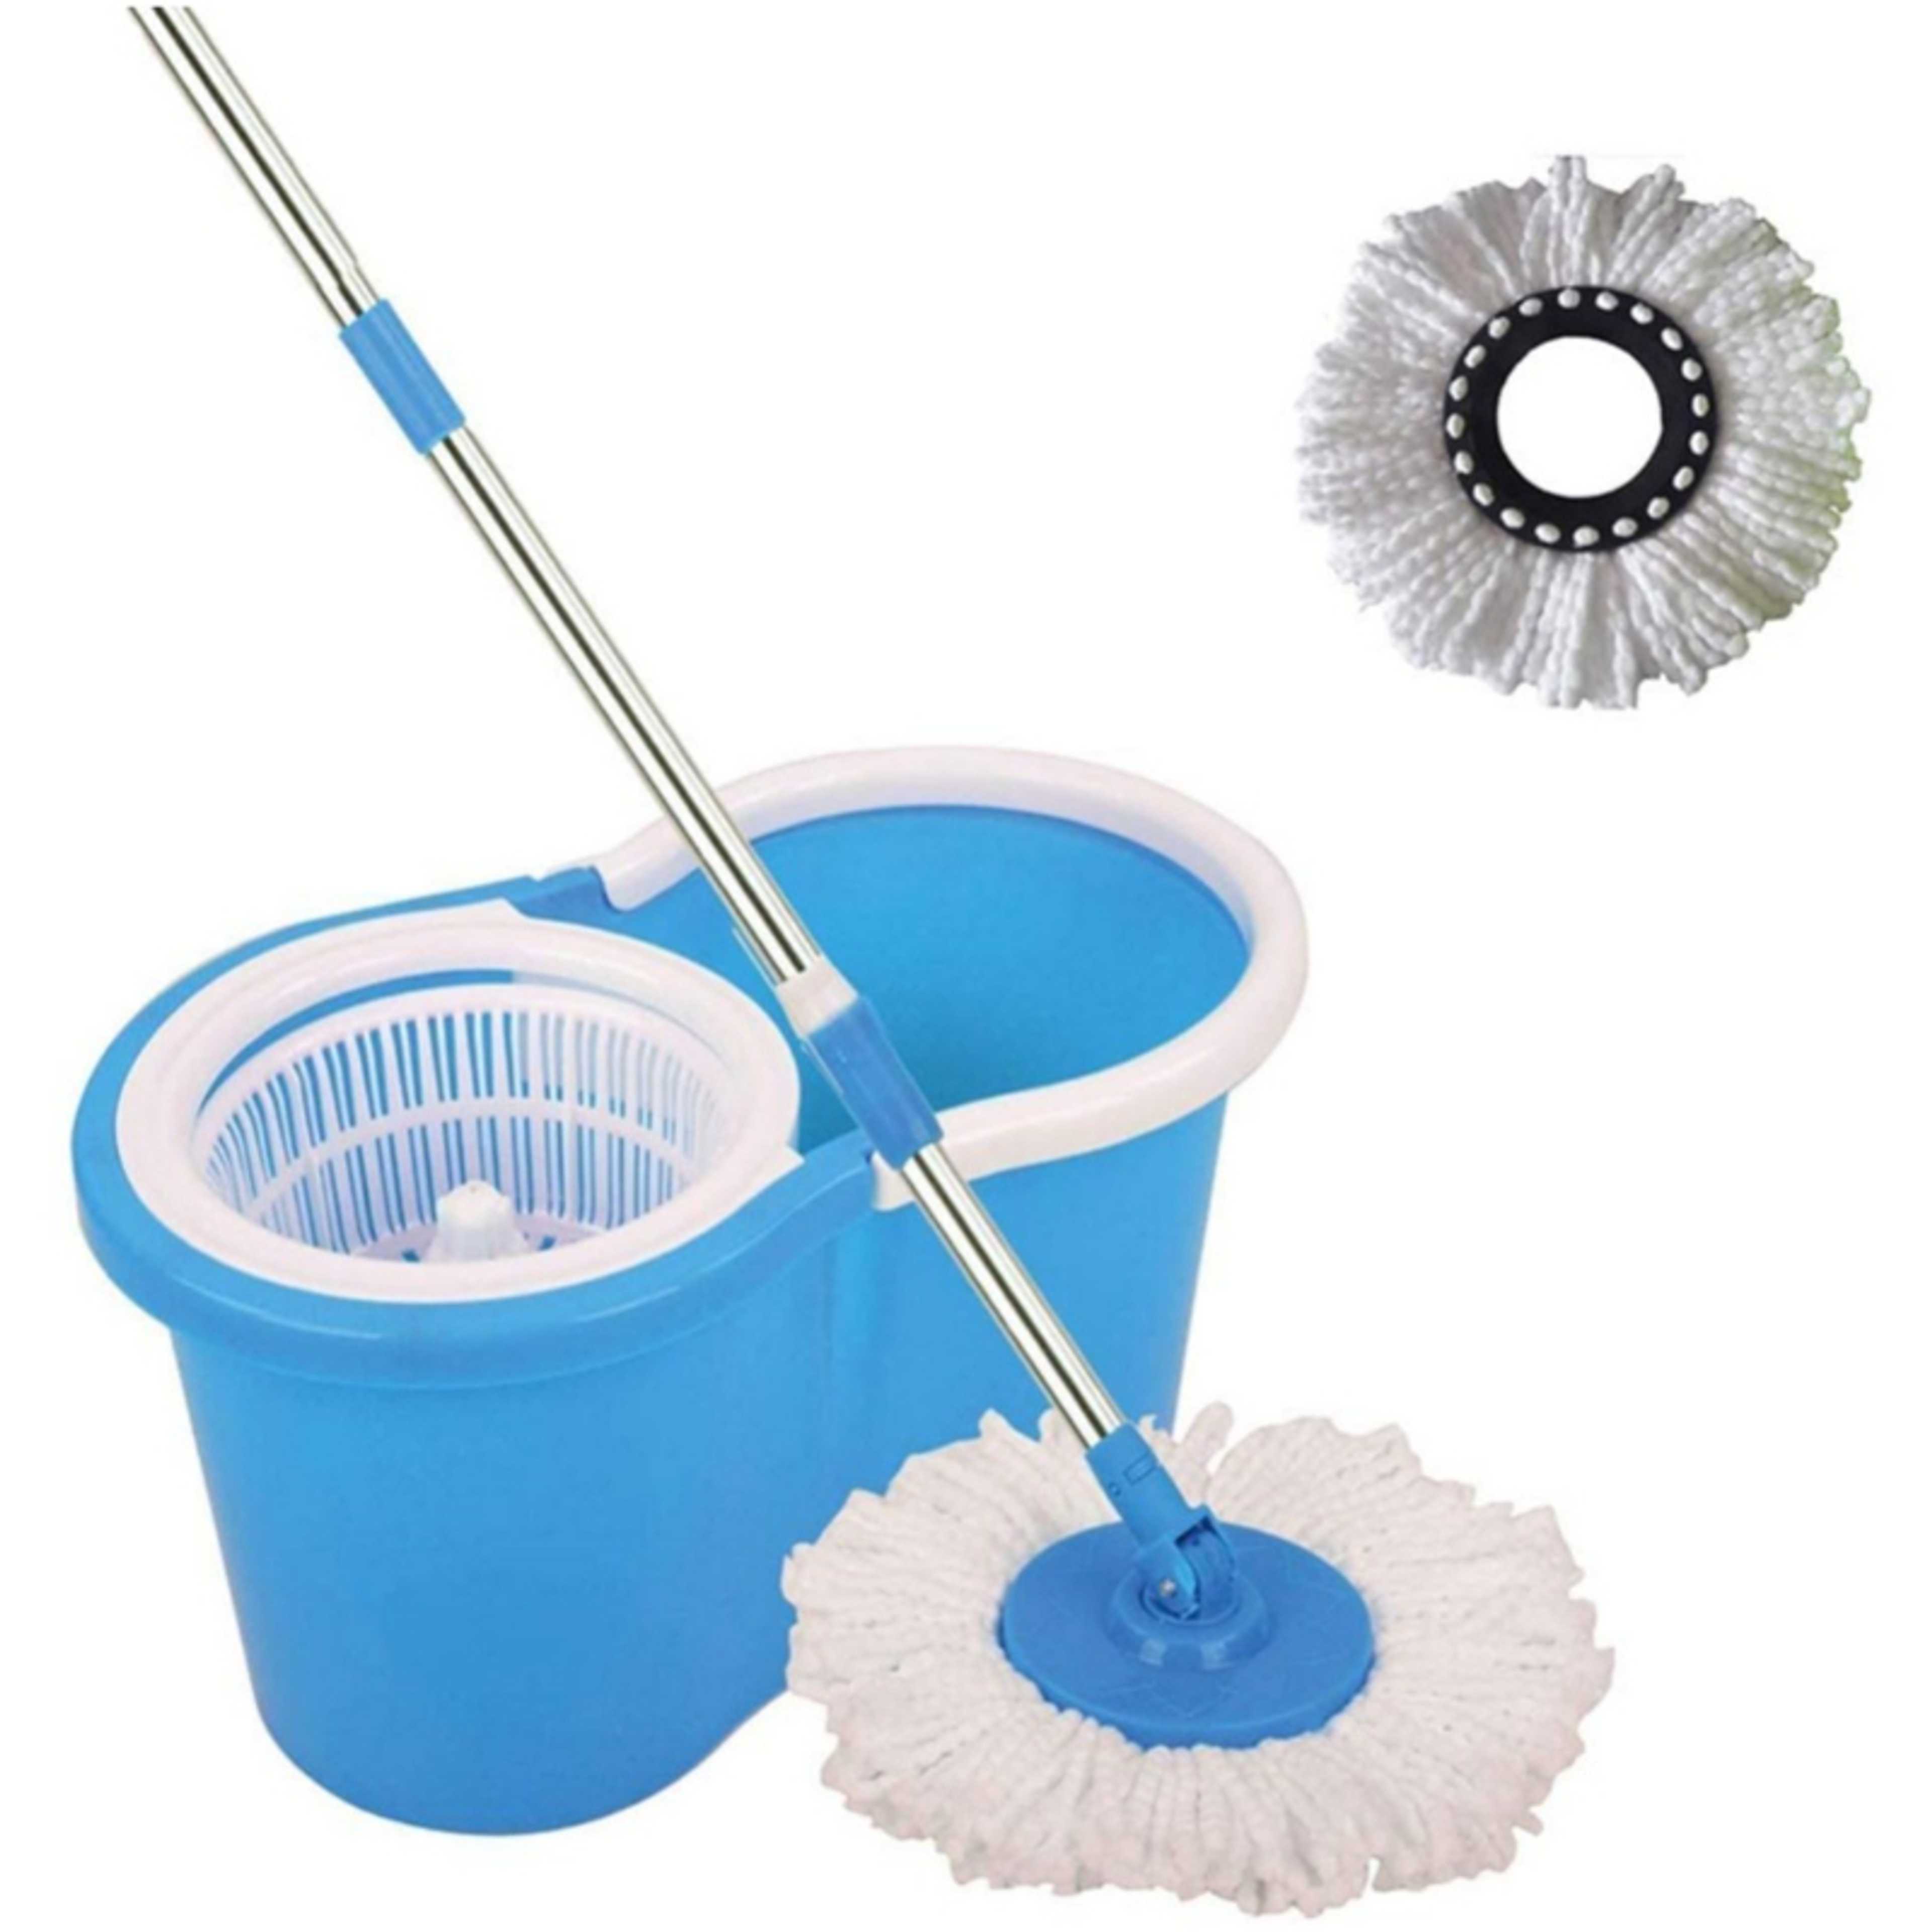 Spin Mop - Easy Spin Magic Mop Set - 360 Degree Microfiber Mop Head Home Clean Tools Microfiber